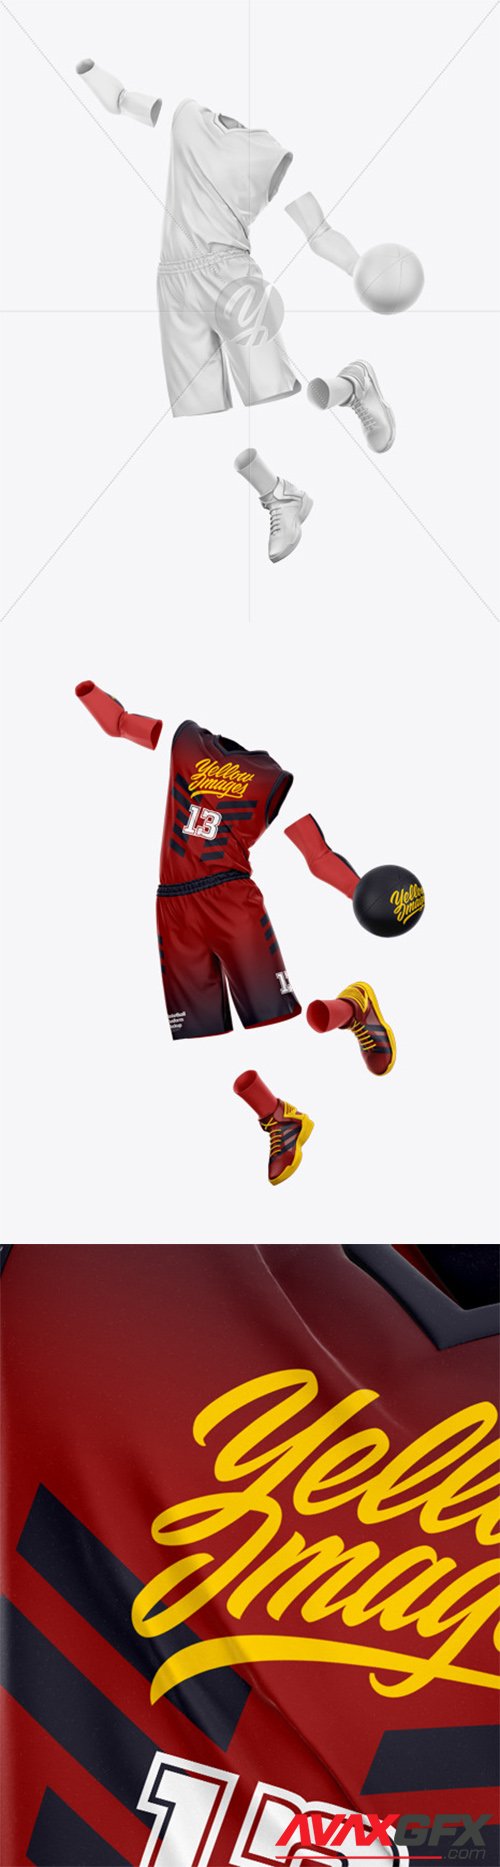 Basketball Uniform - Front View 44400